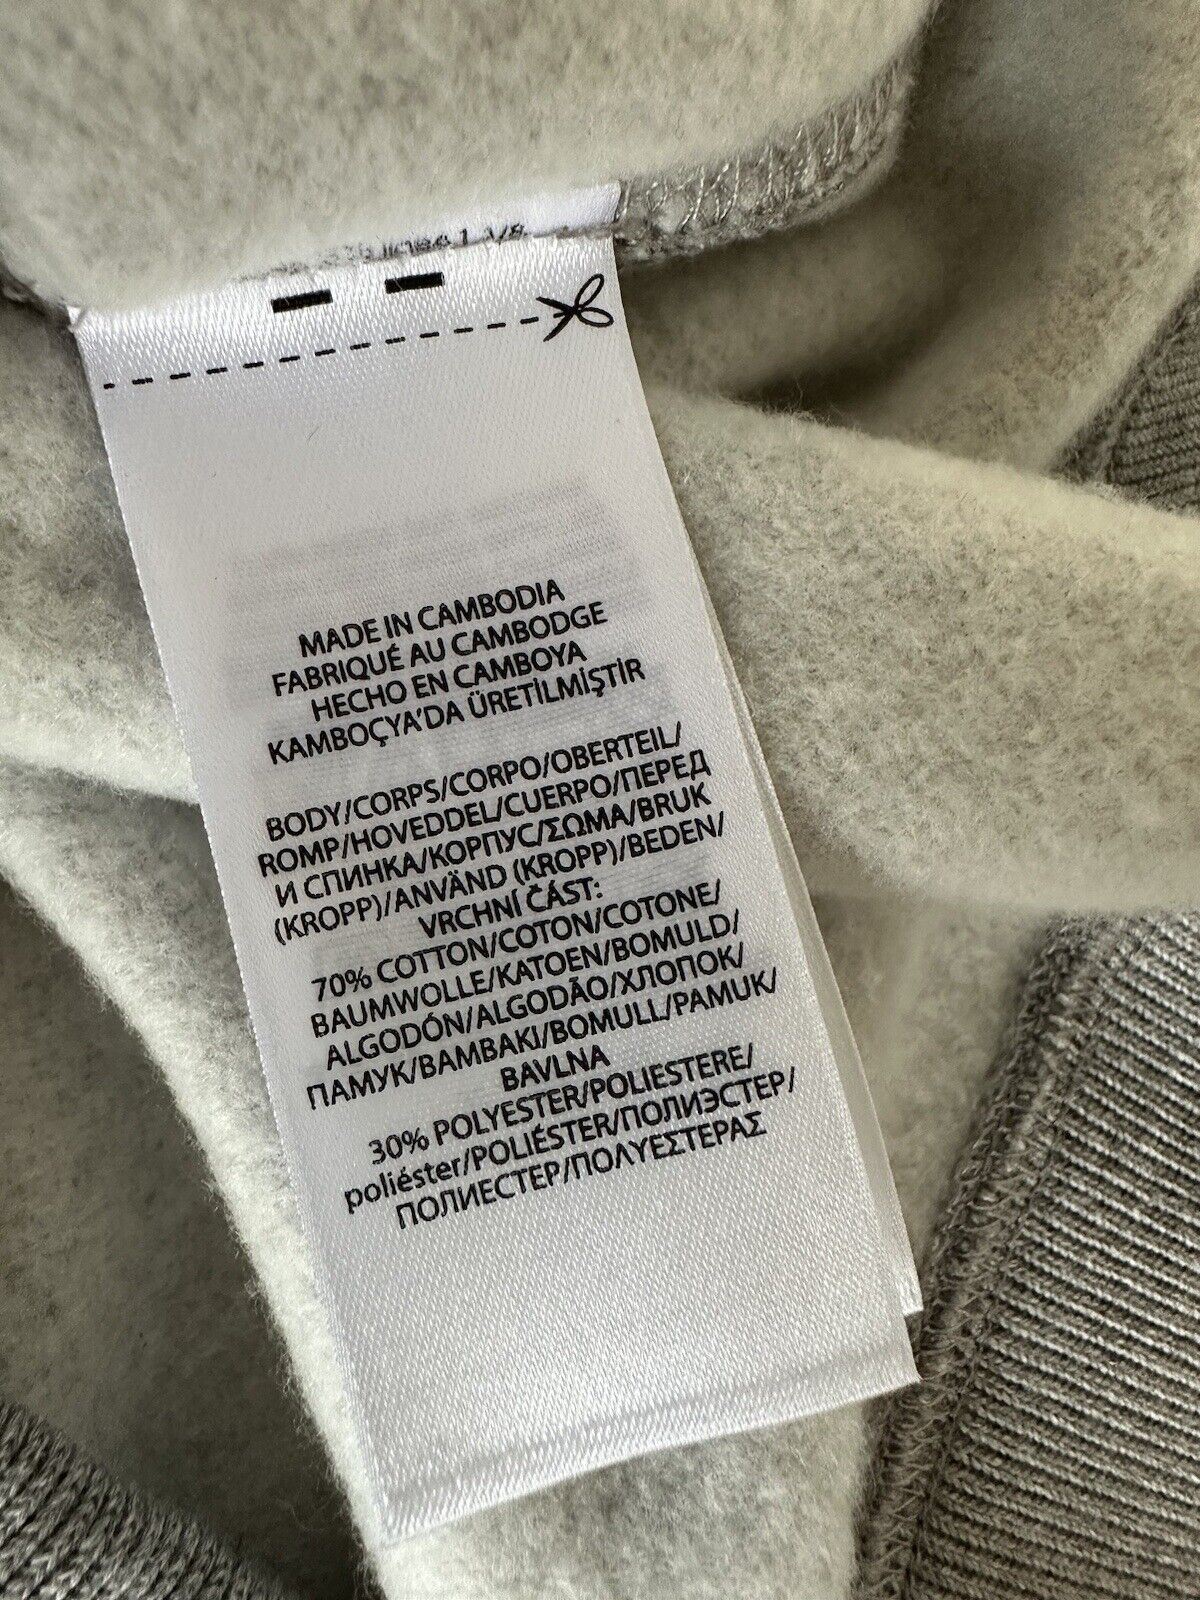 Neues Polo Ralph Lauren Bear Sweatshirt für 168 $, Grau, 2XL/2TG 